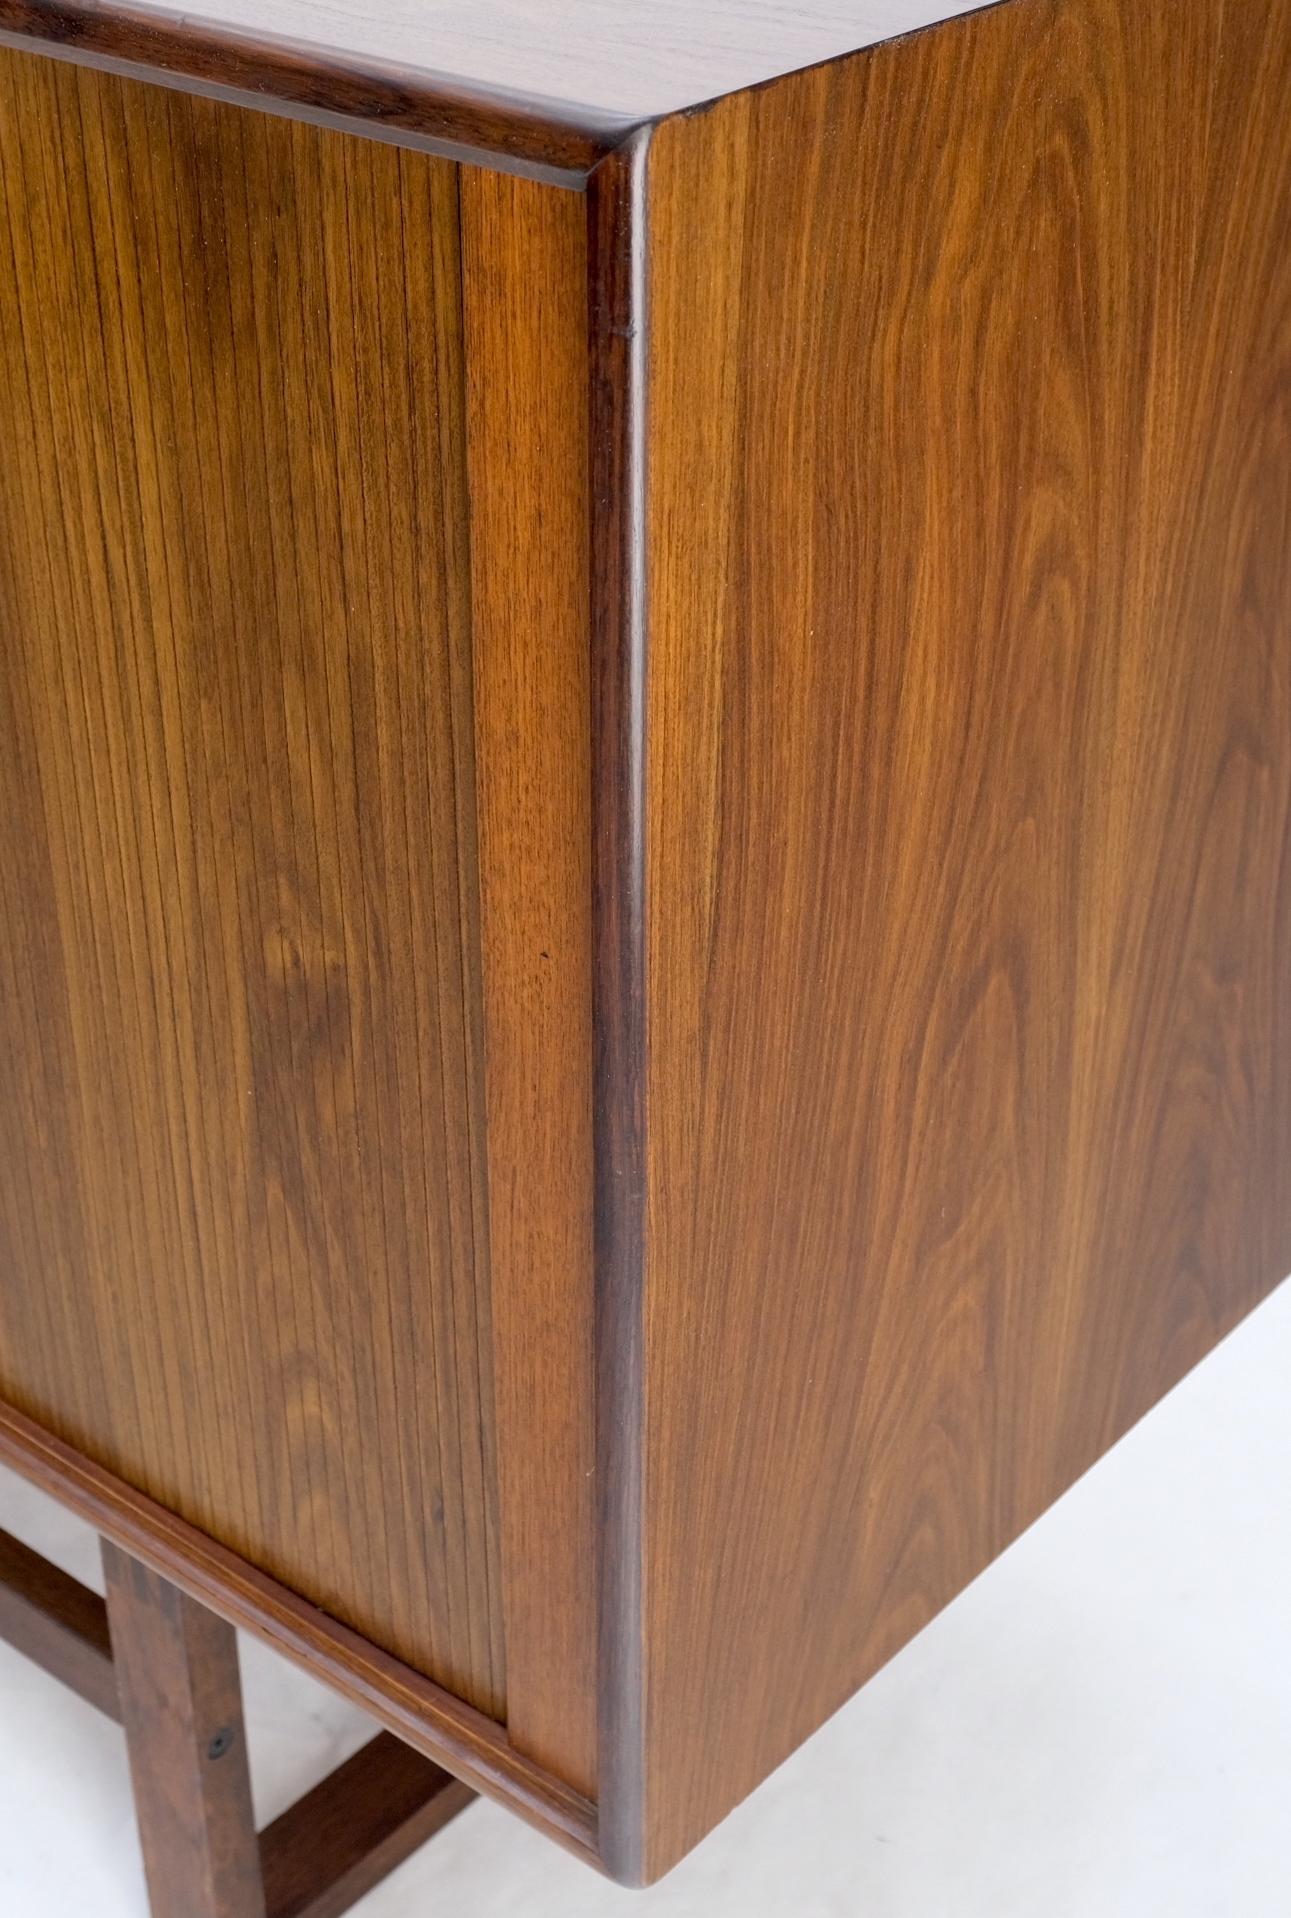 20th Century Tambour Doors Rosewood Danish Mid-Century Modern Long Credenza Buffet Dresser For Sale